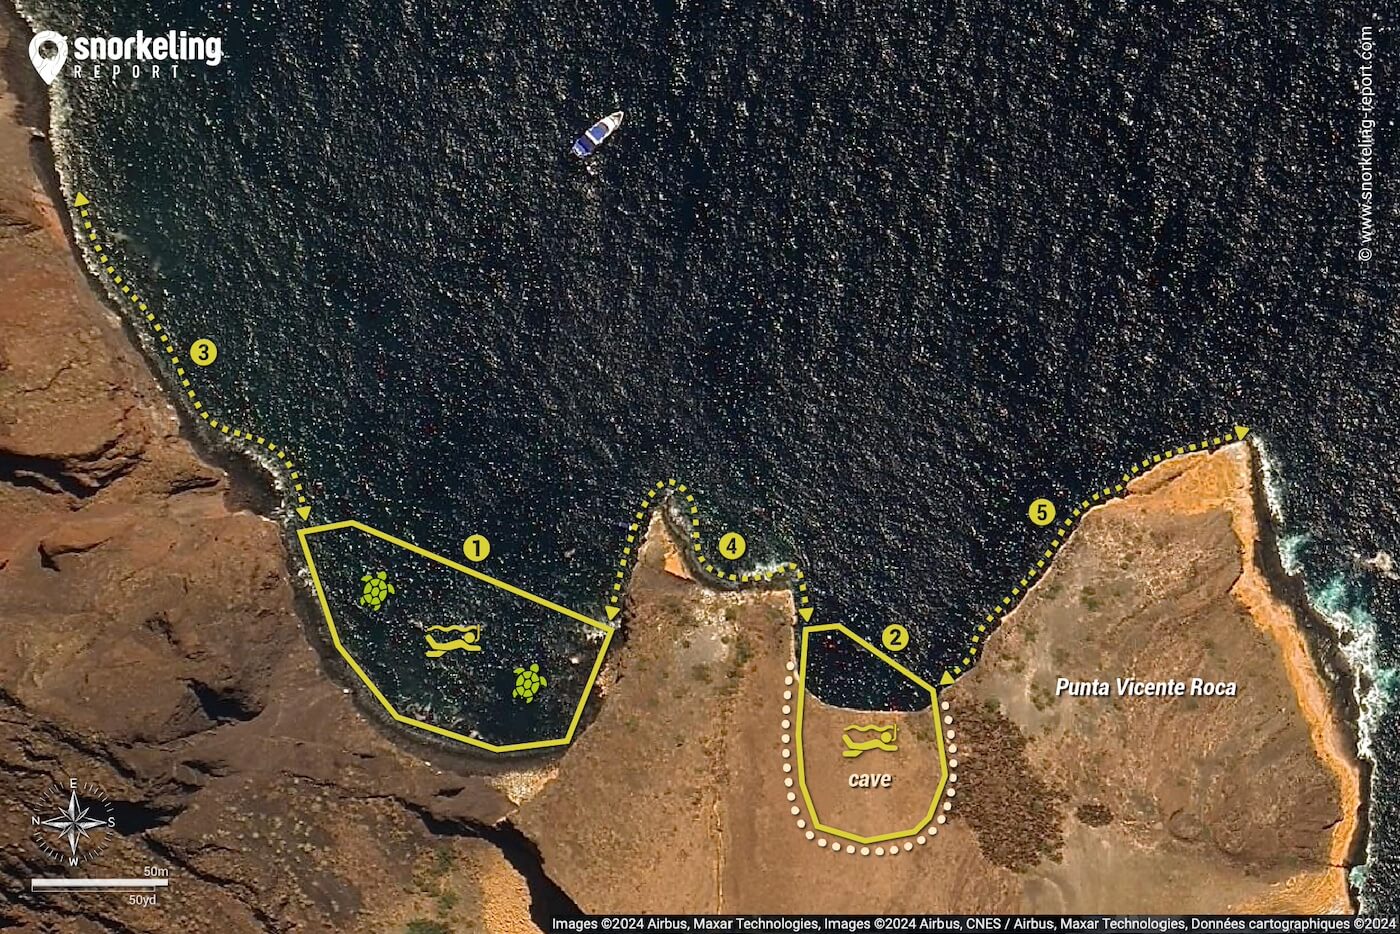 Punta Vicente Roca snorkeling map, Isabela Island